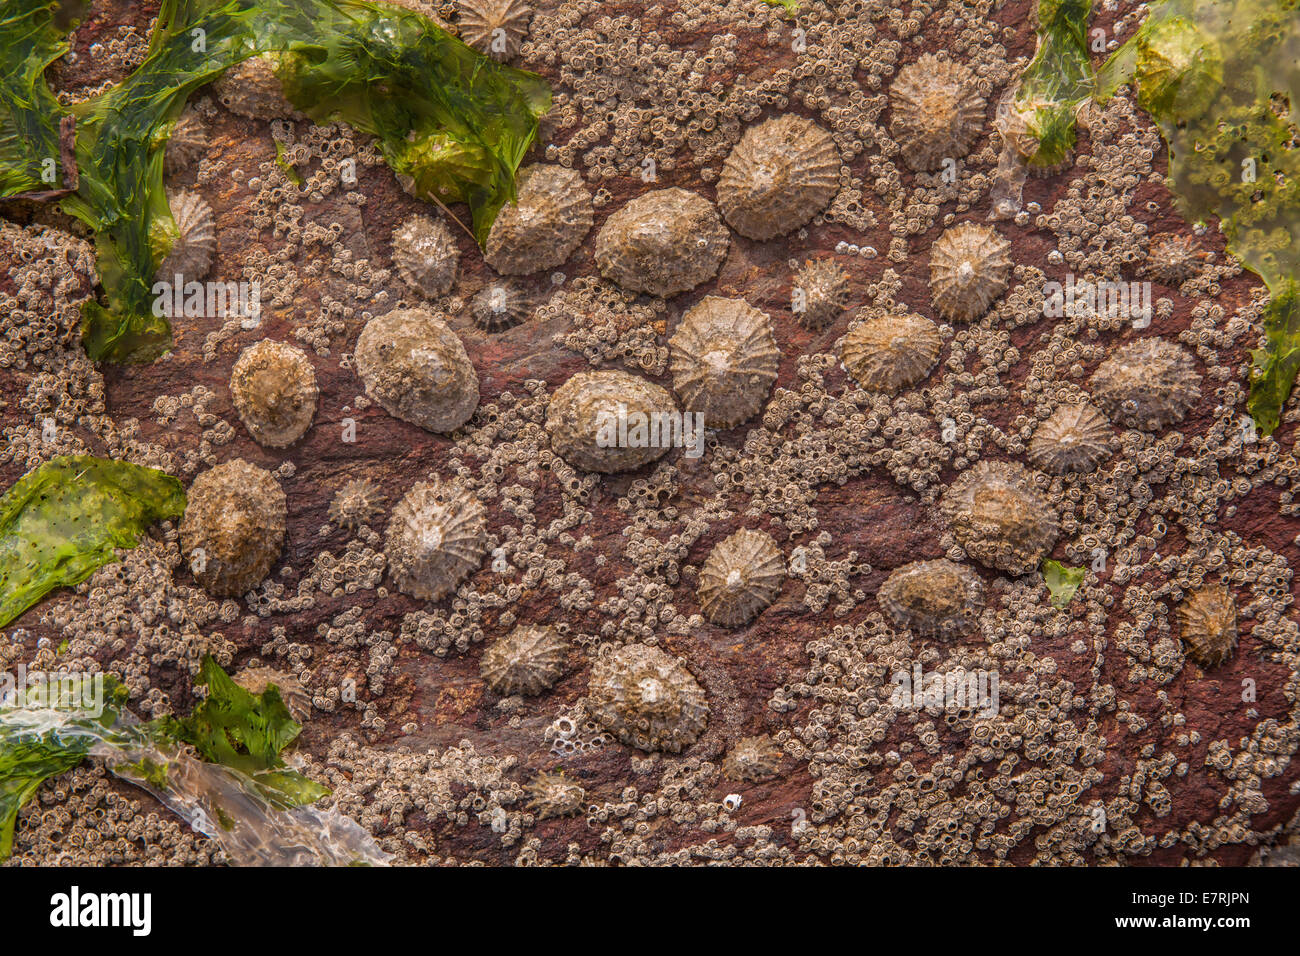 Limpet shells on a rock, Hope Cove, Devon, England, United Kingdom. Stock Photo